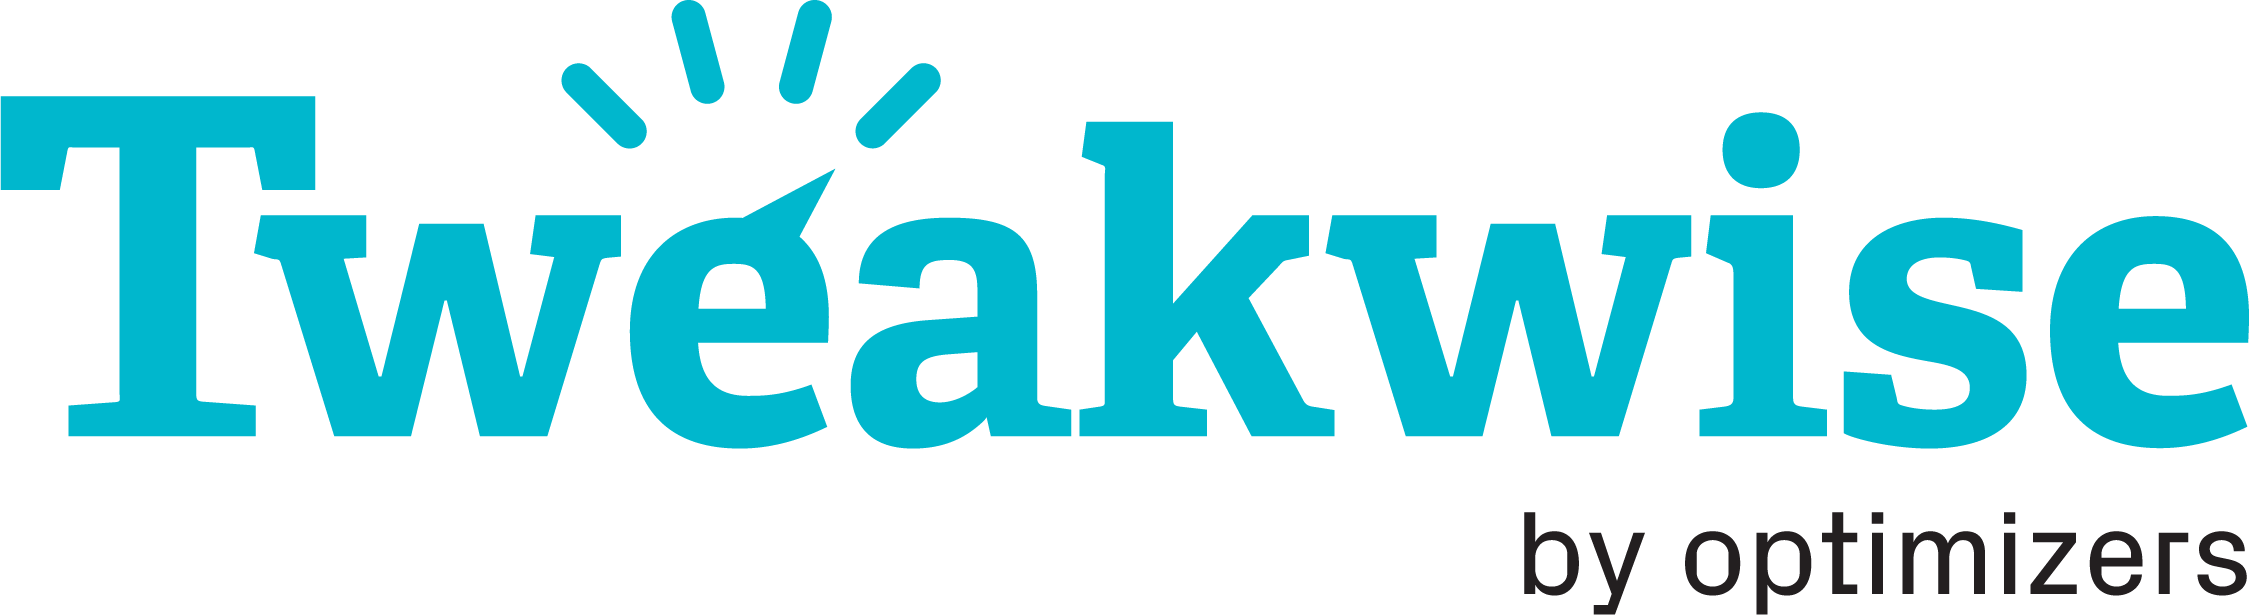 Tweakwise-turquiose logo